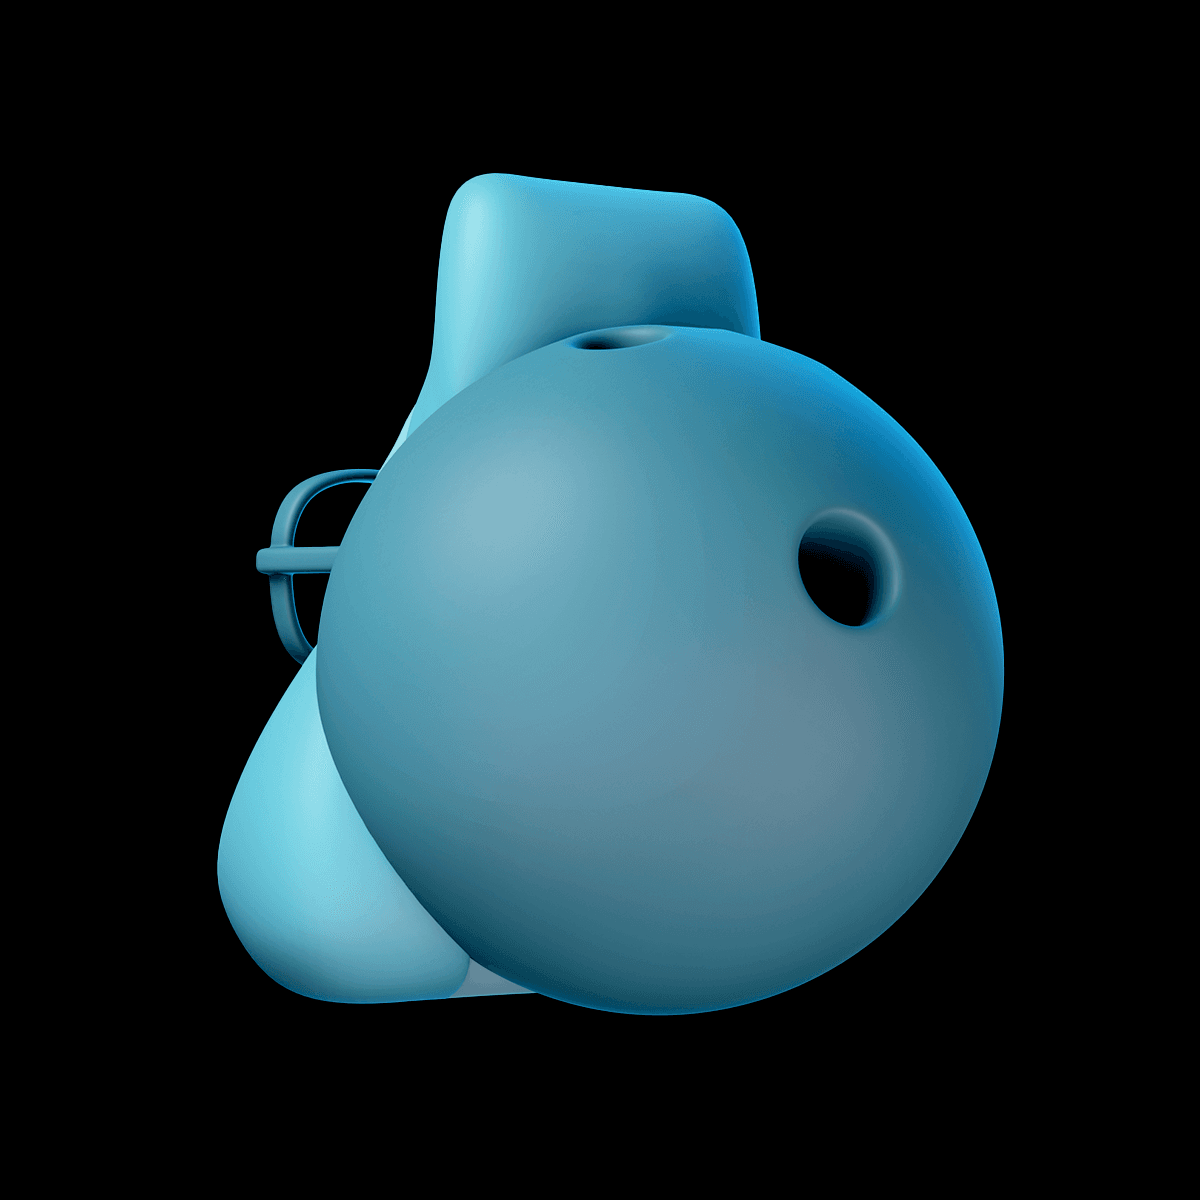 Walter Sobchak bowling ball head 3d model